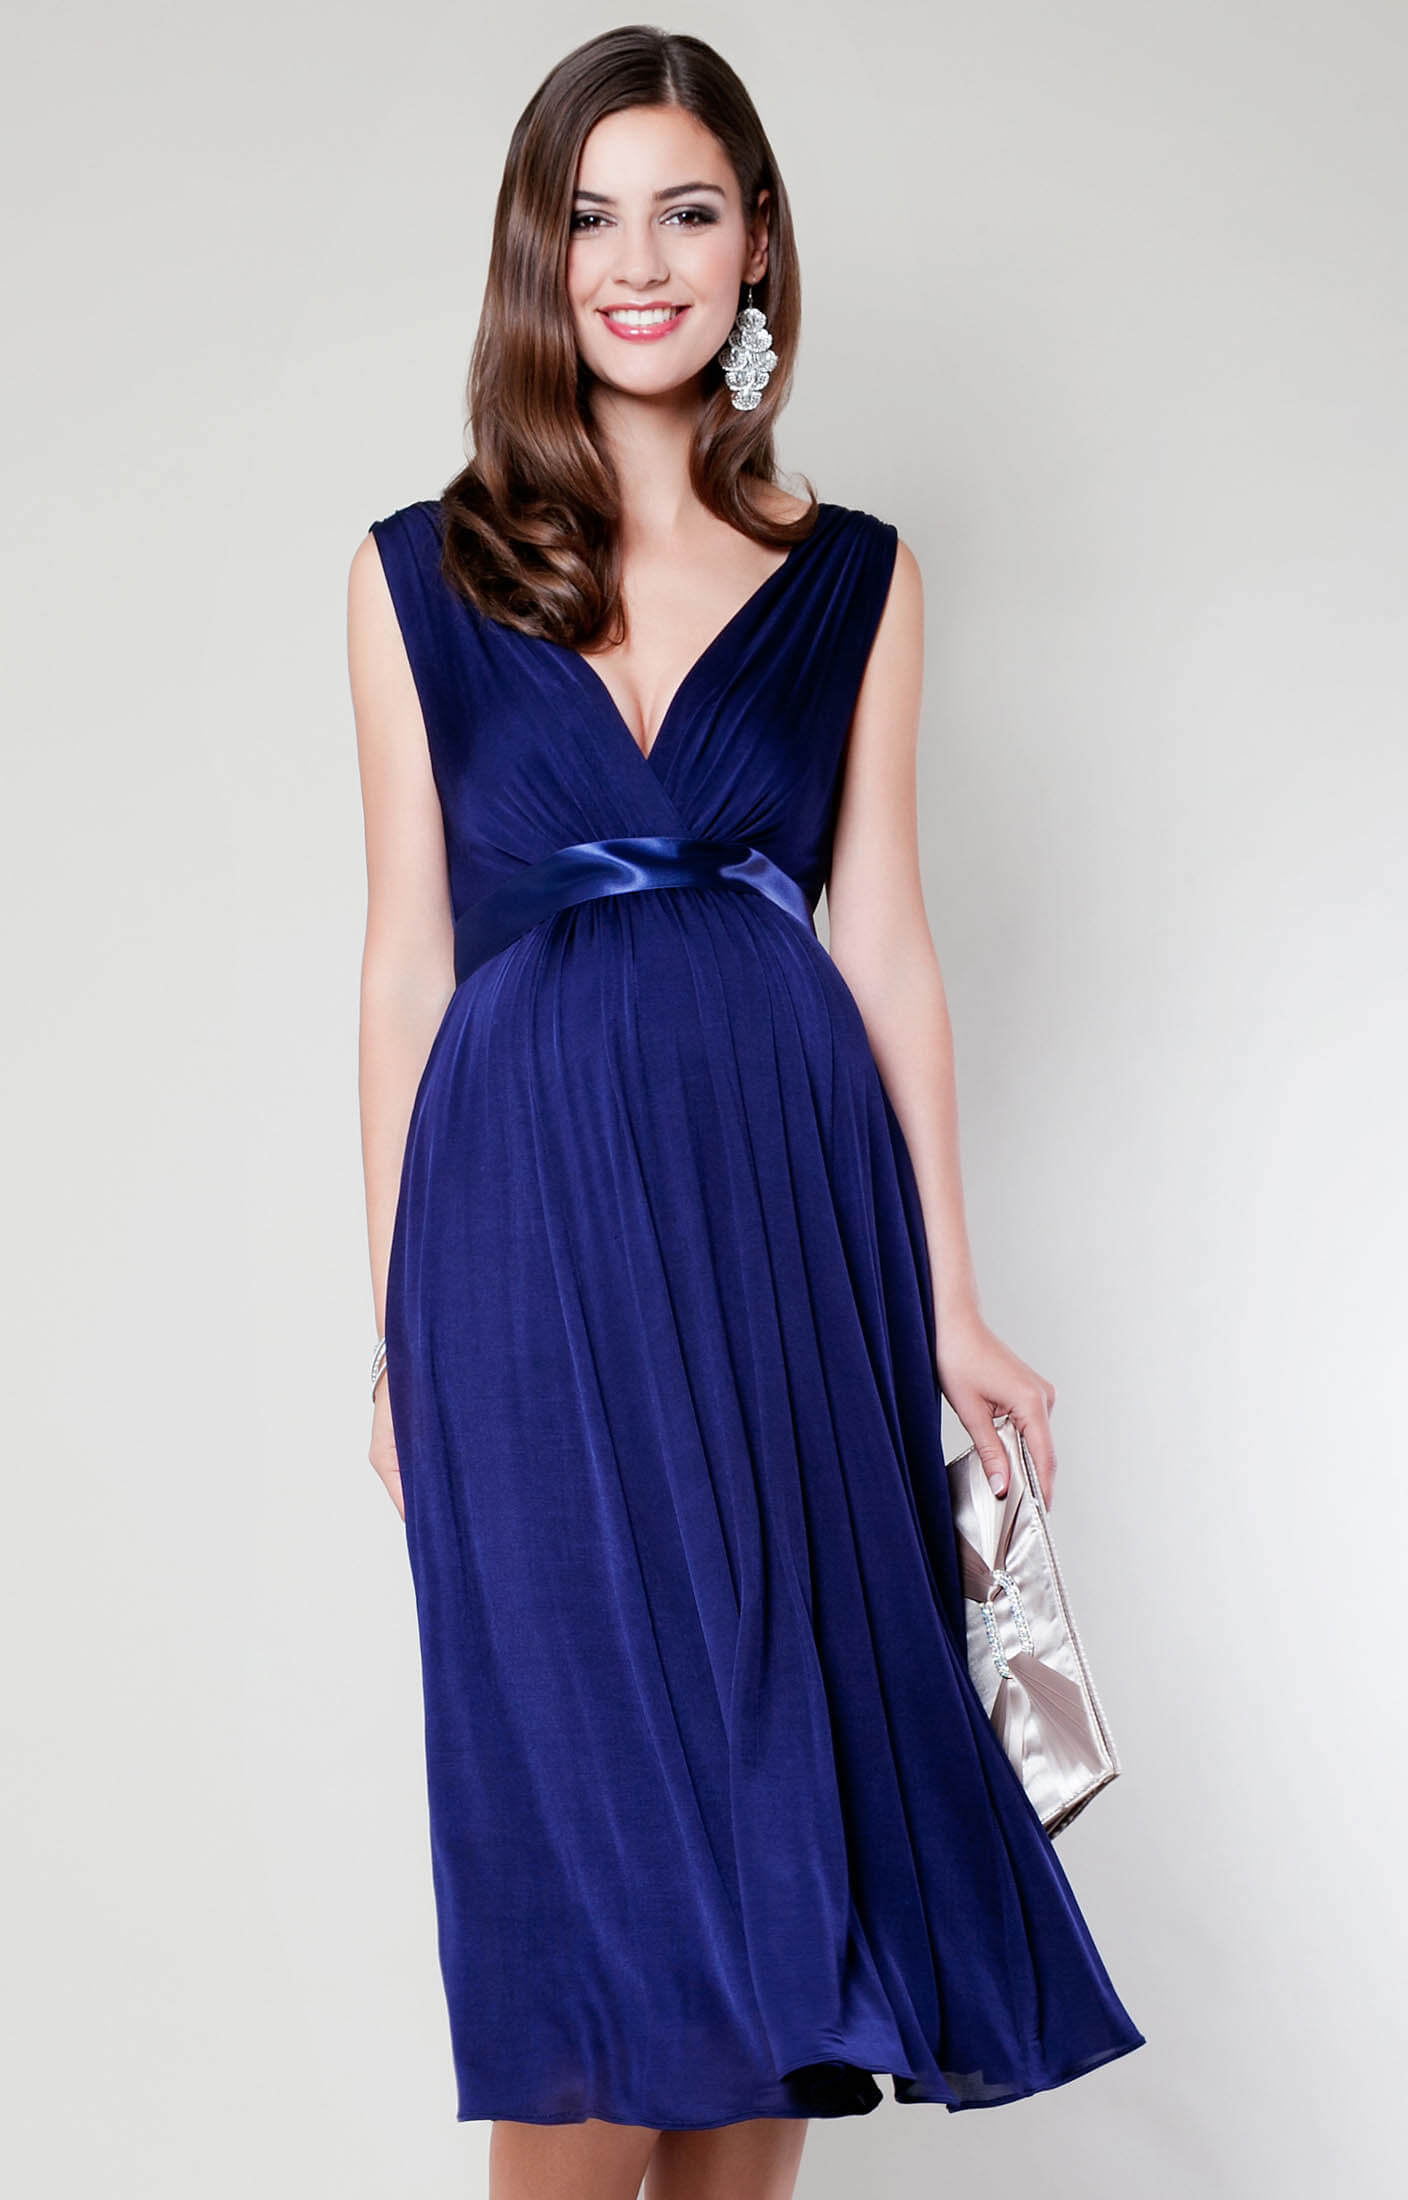 Anastasia Maternity Dress Short (Eclipse Blue) - Maternity Wedding